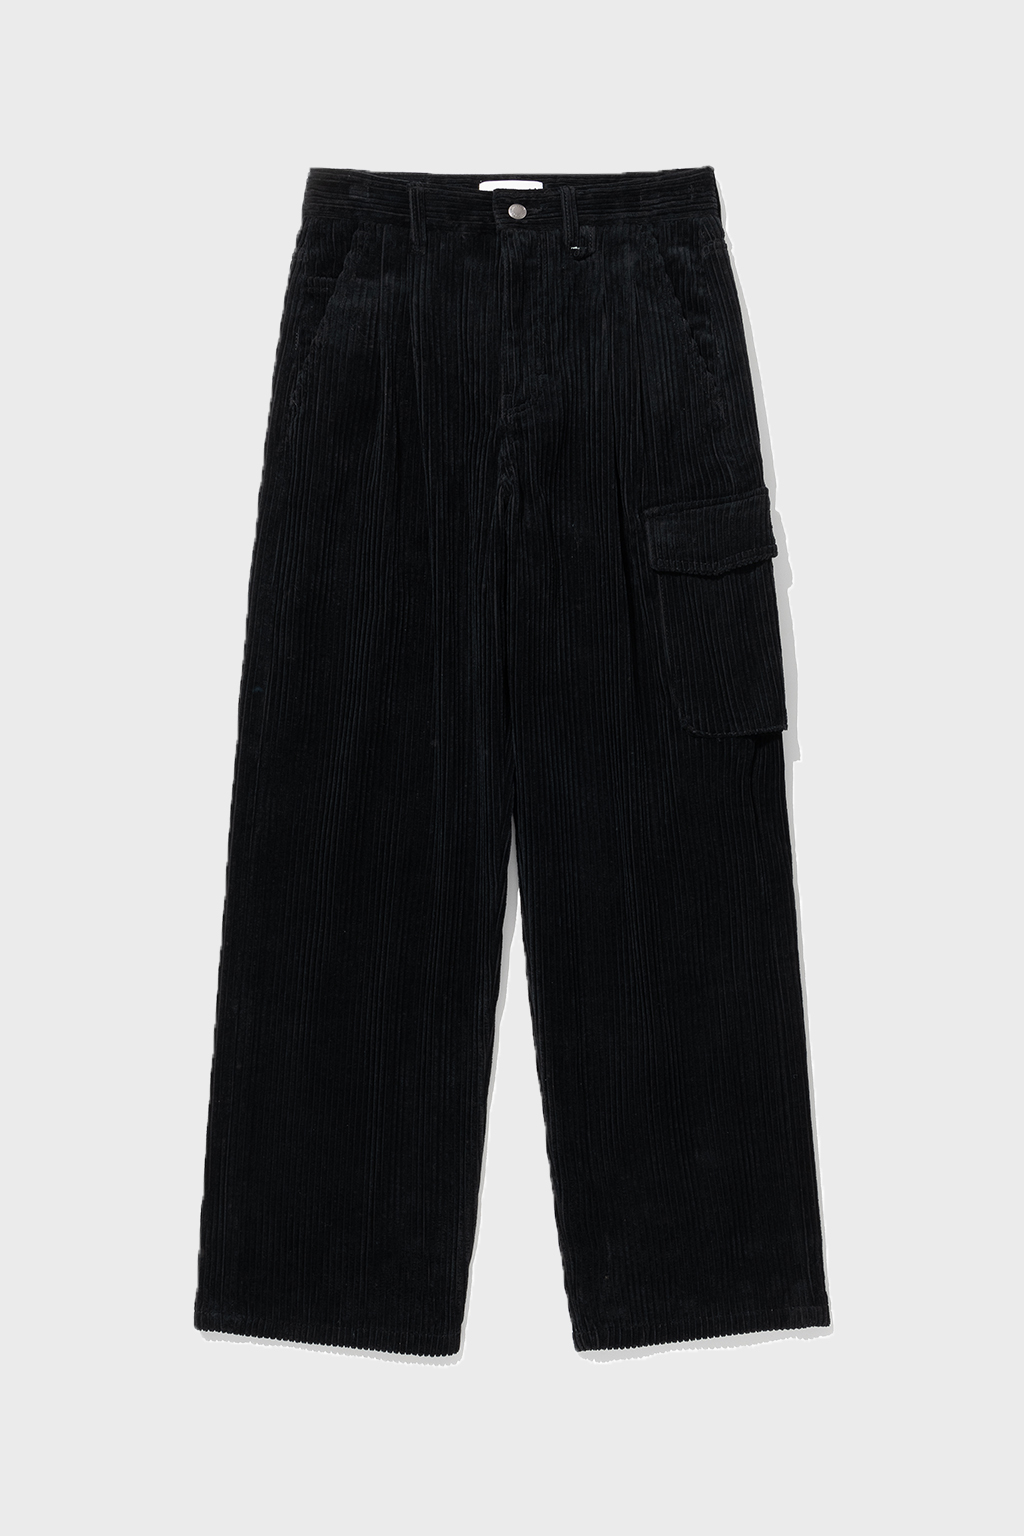 [PRT X FOTTNERS] Two Tuck Corduroy Pants (Black)